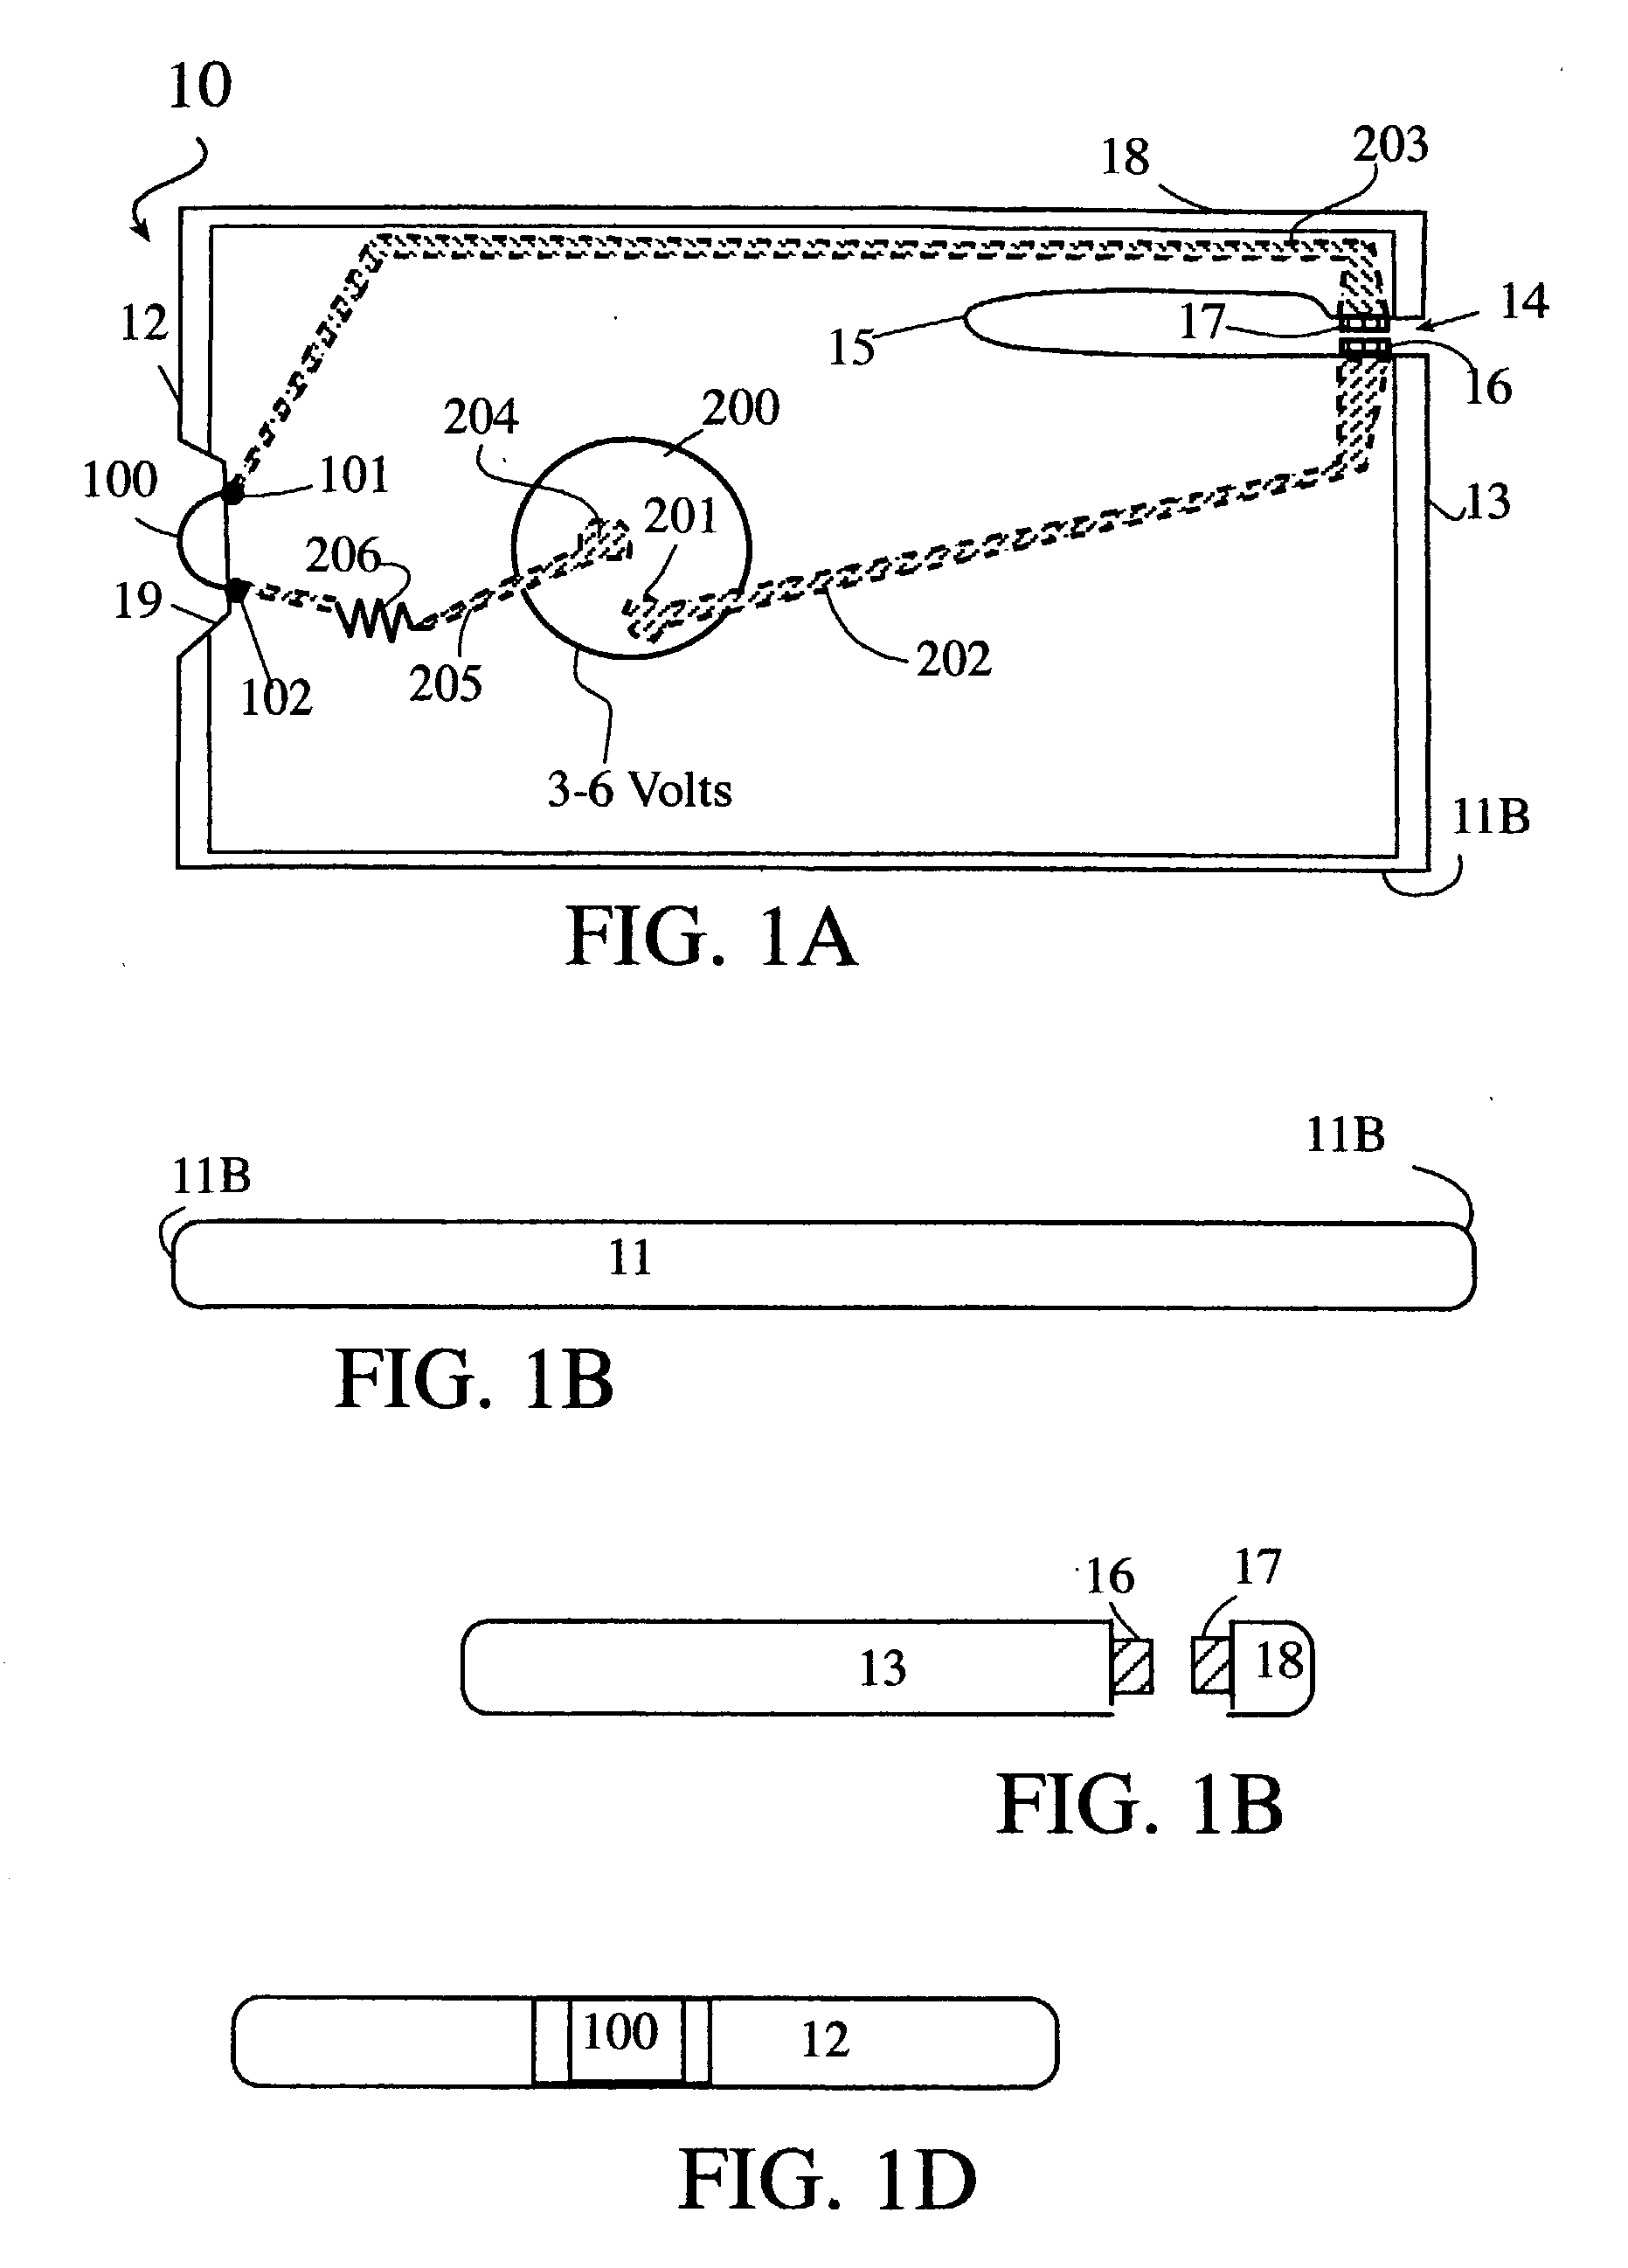 Flat illuminator with flexible integral switching arm